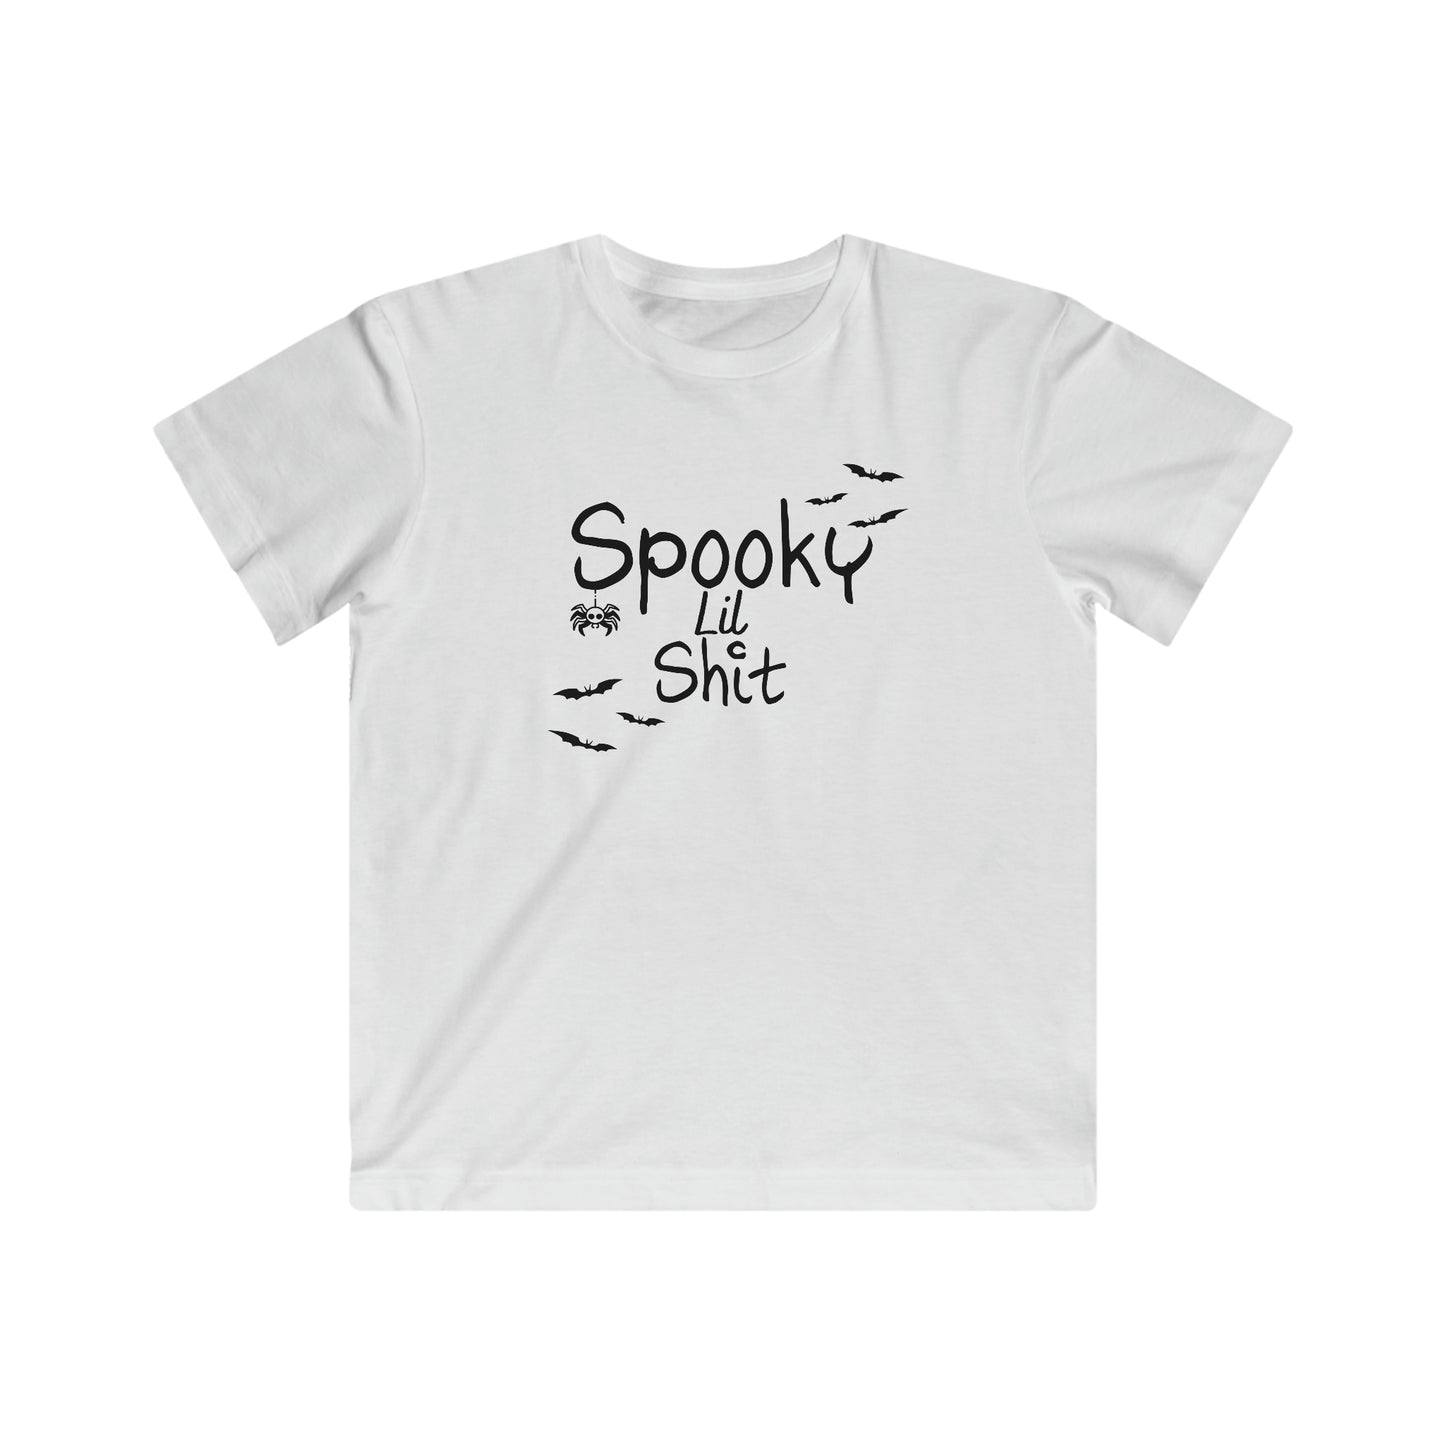 Kids Spooky Tee, Kids Halloween Shirt, Kids Holiday Shirt